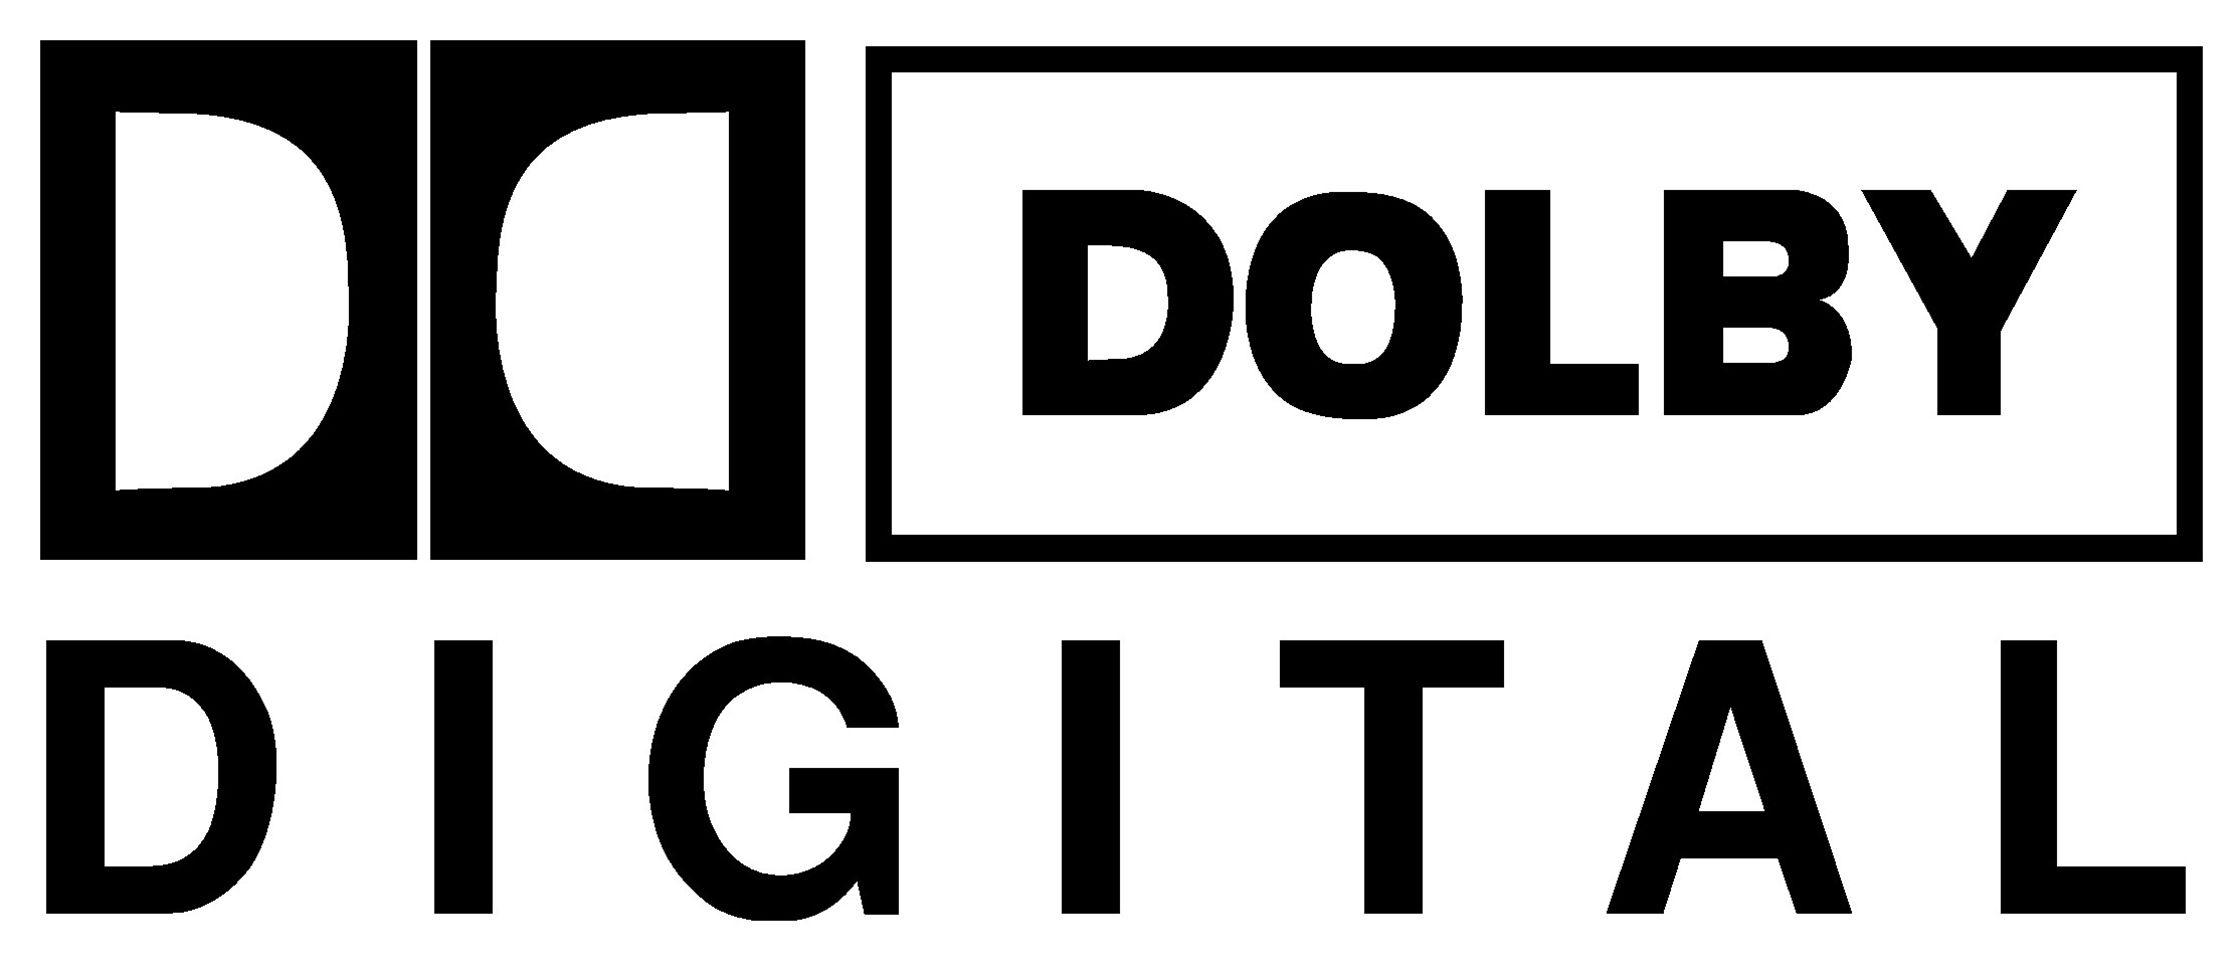 DTS Stereo Logo - Dolby digital Logos